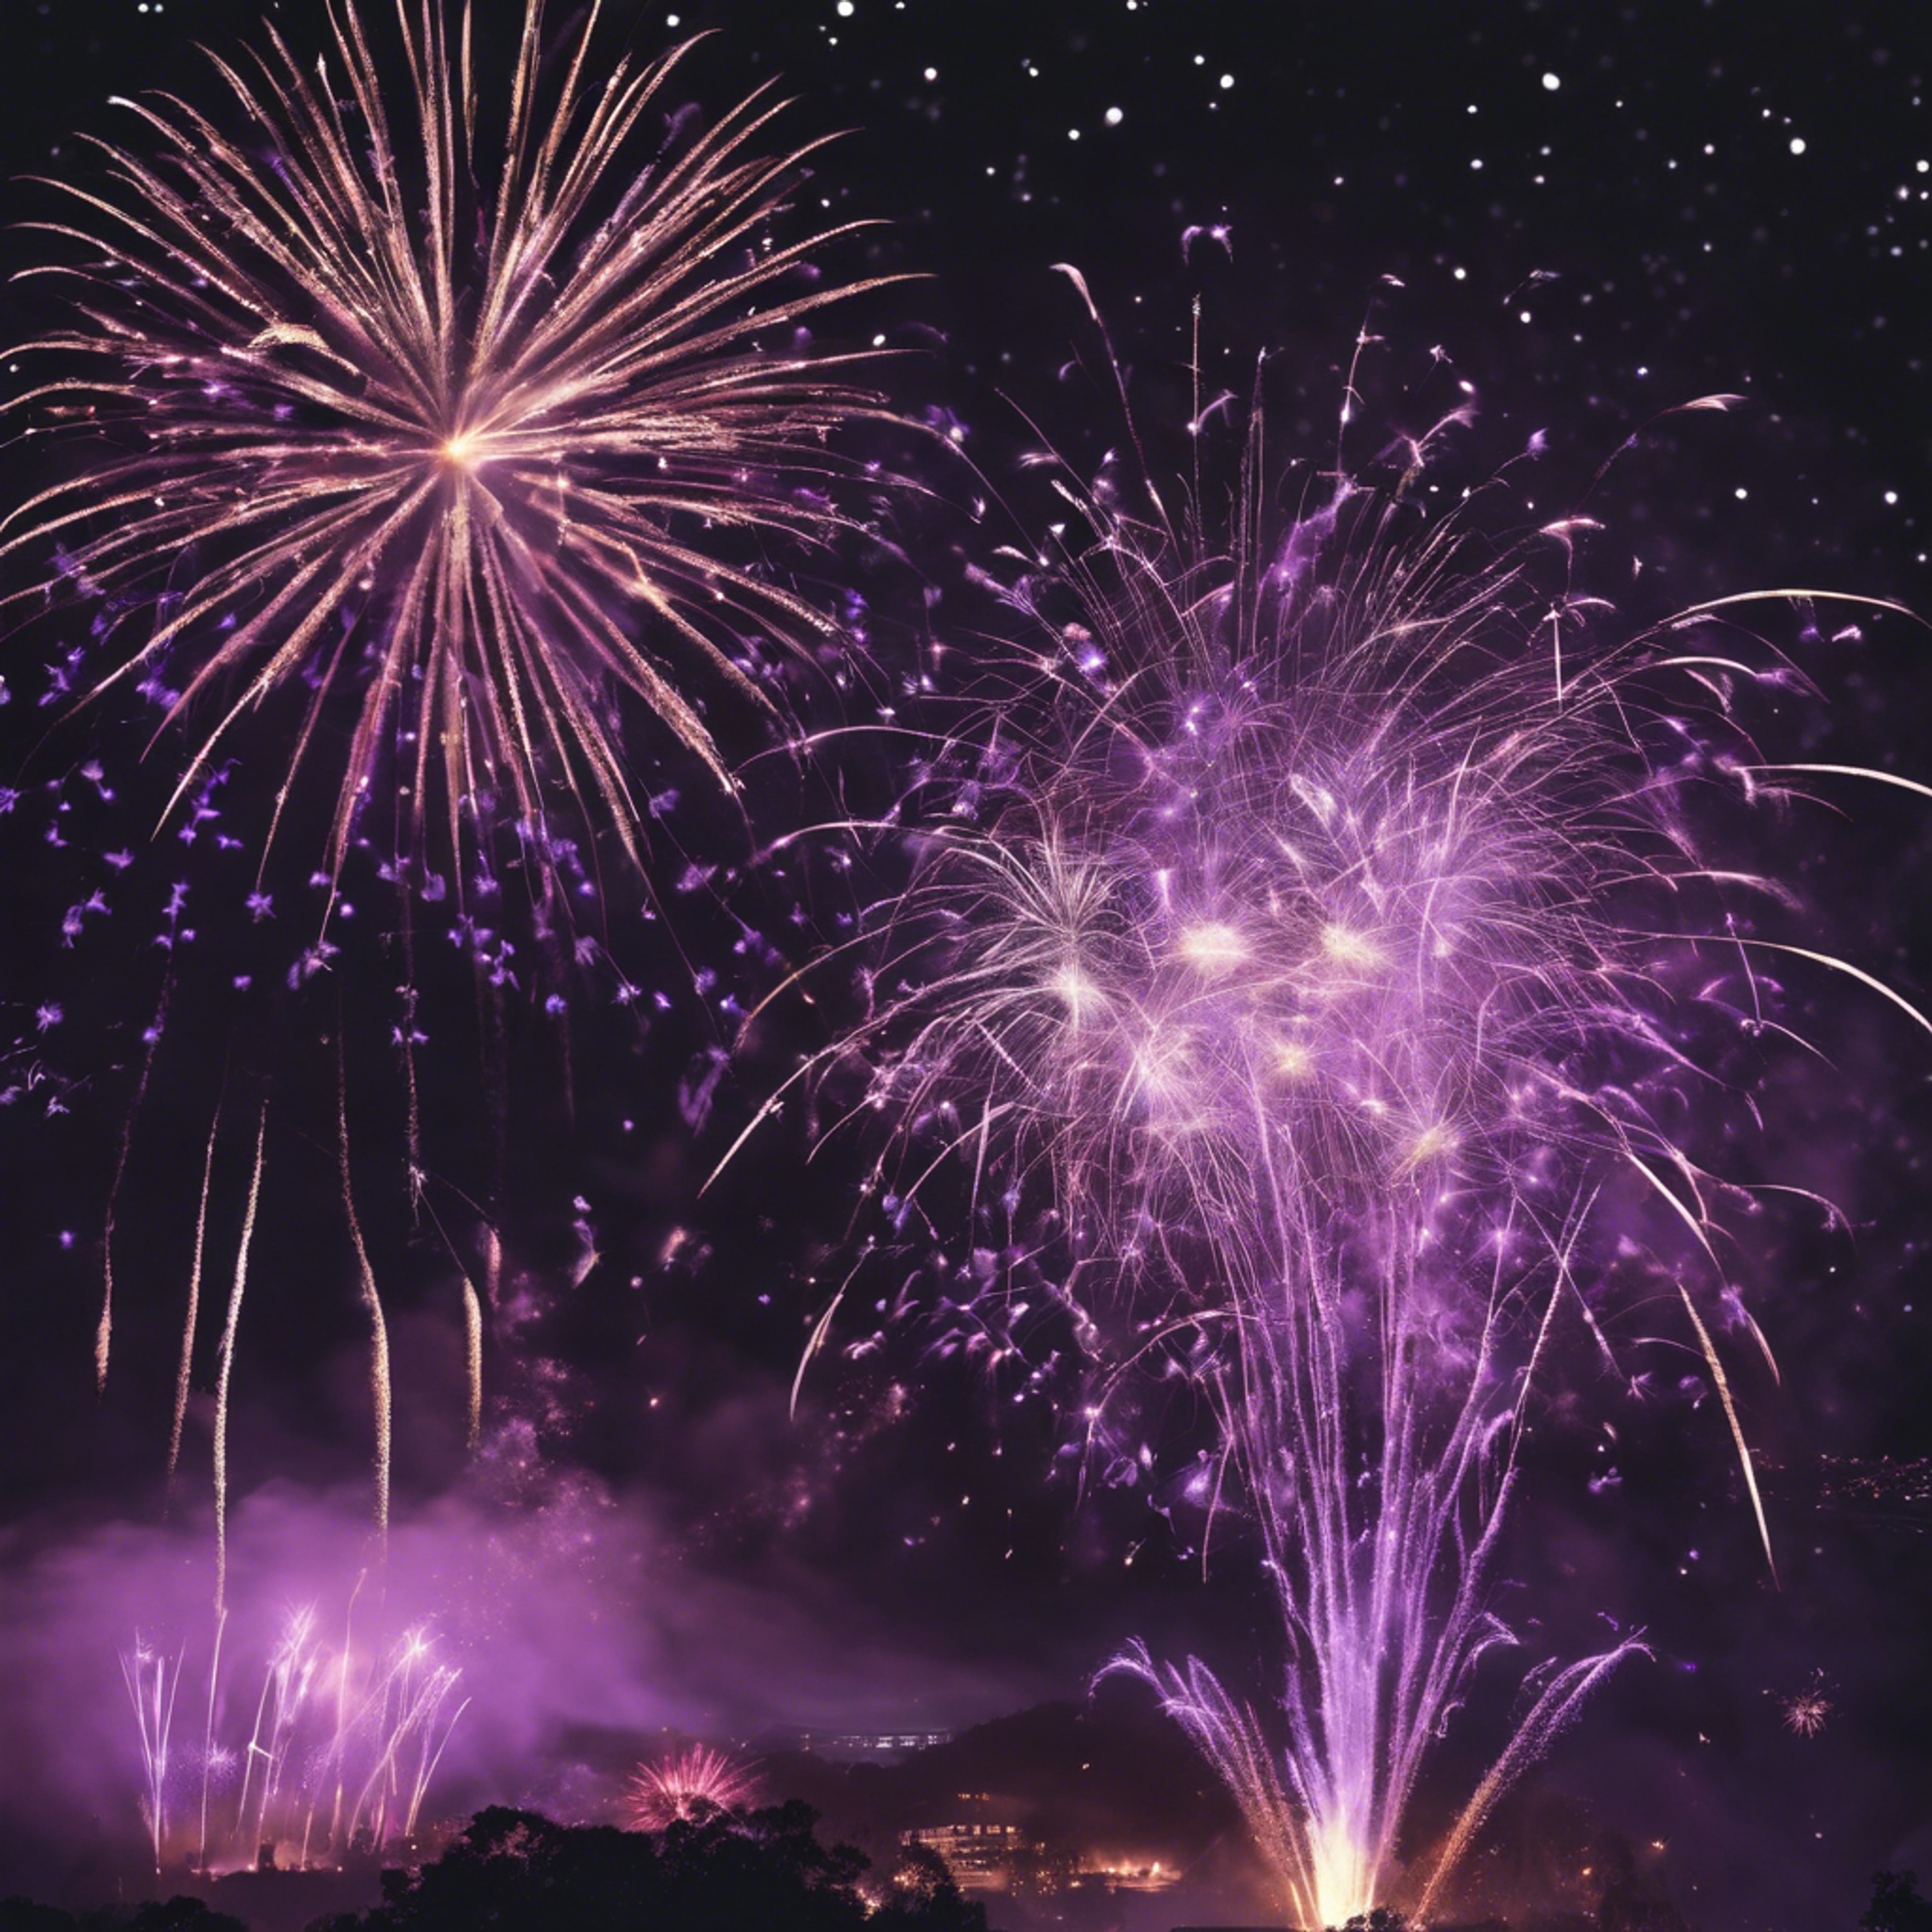 Black and purple fireworks lighting up the night sky during a grand celebration. Wallpaper[a63540e6fc8e4a549ec0]